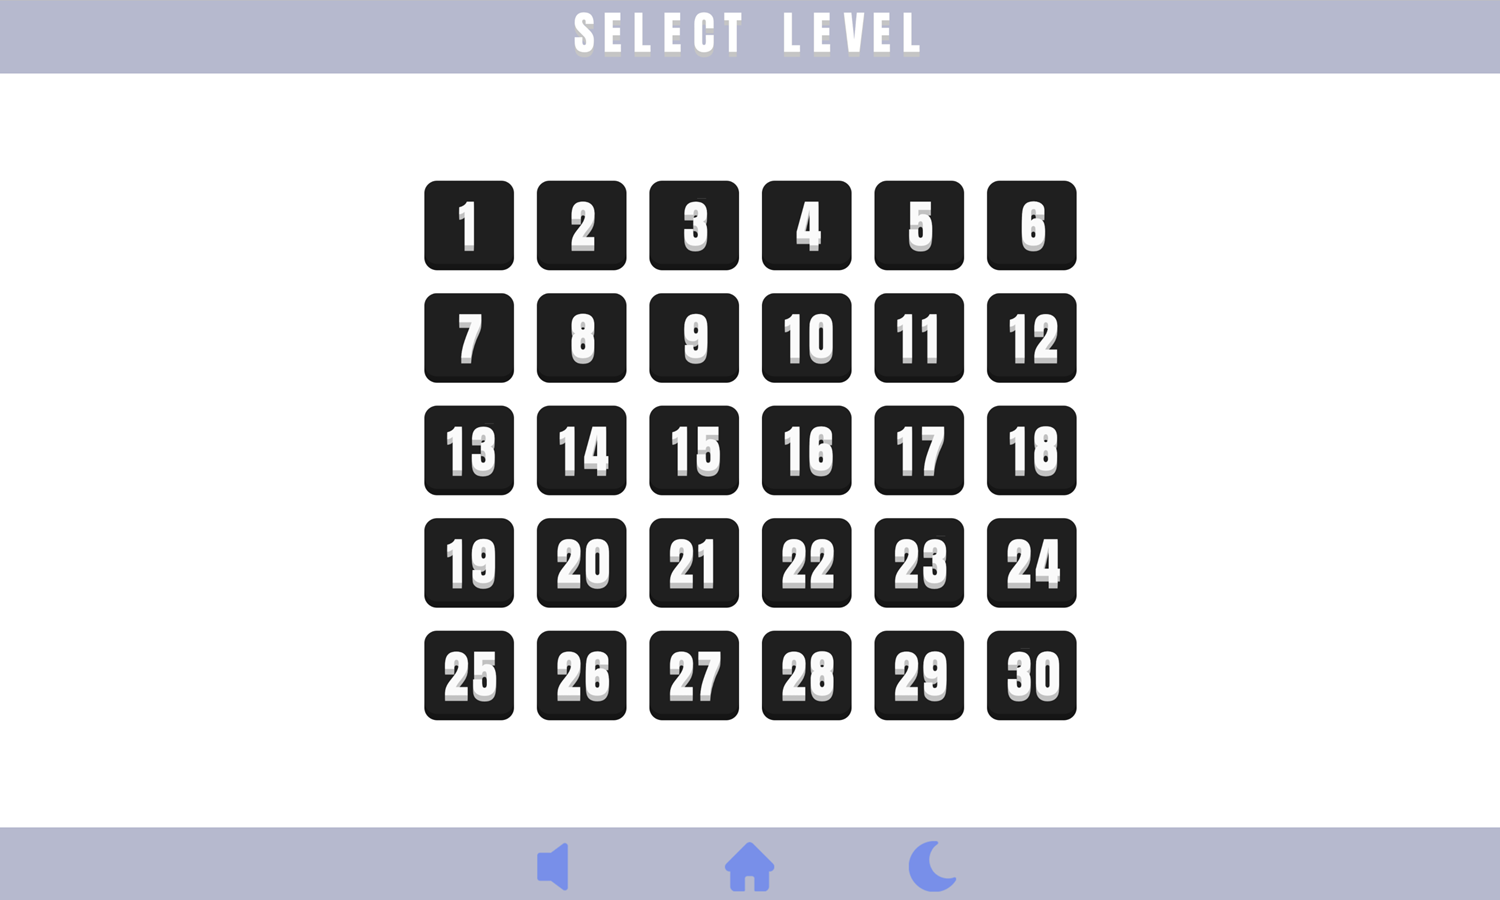 Dasshu Box Game Level Select Screen Screenshot.